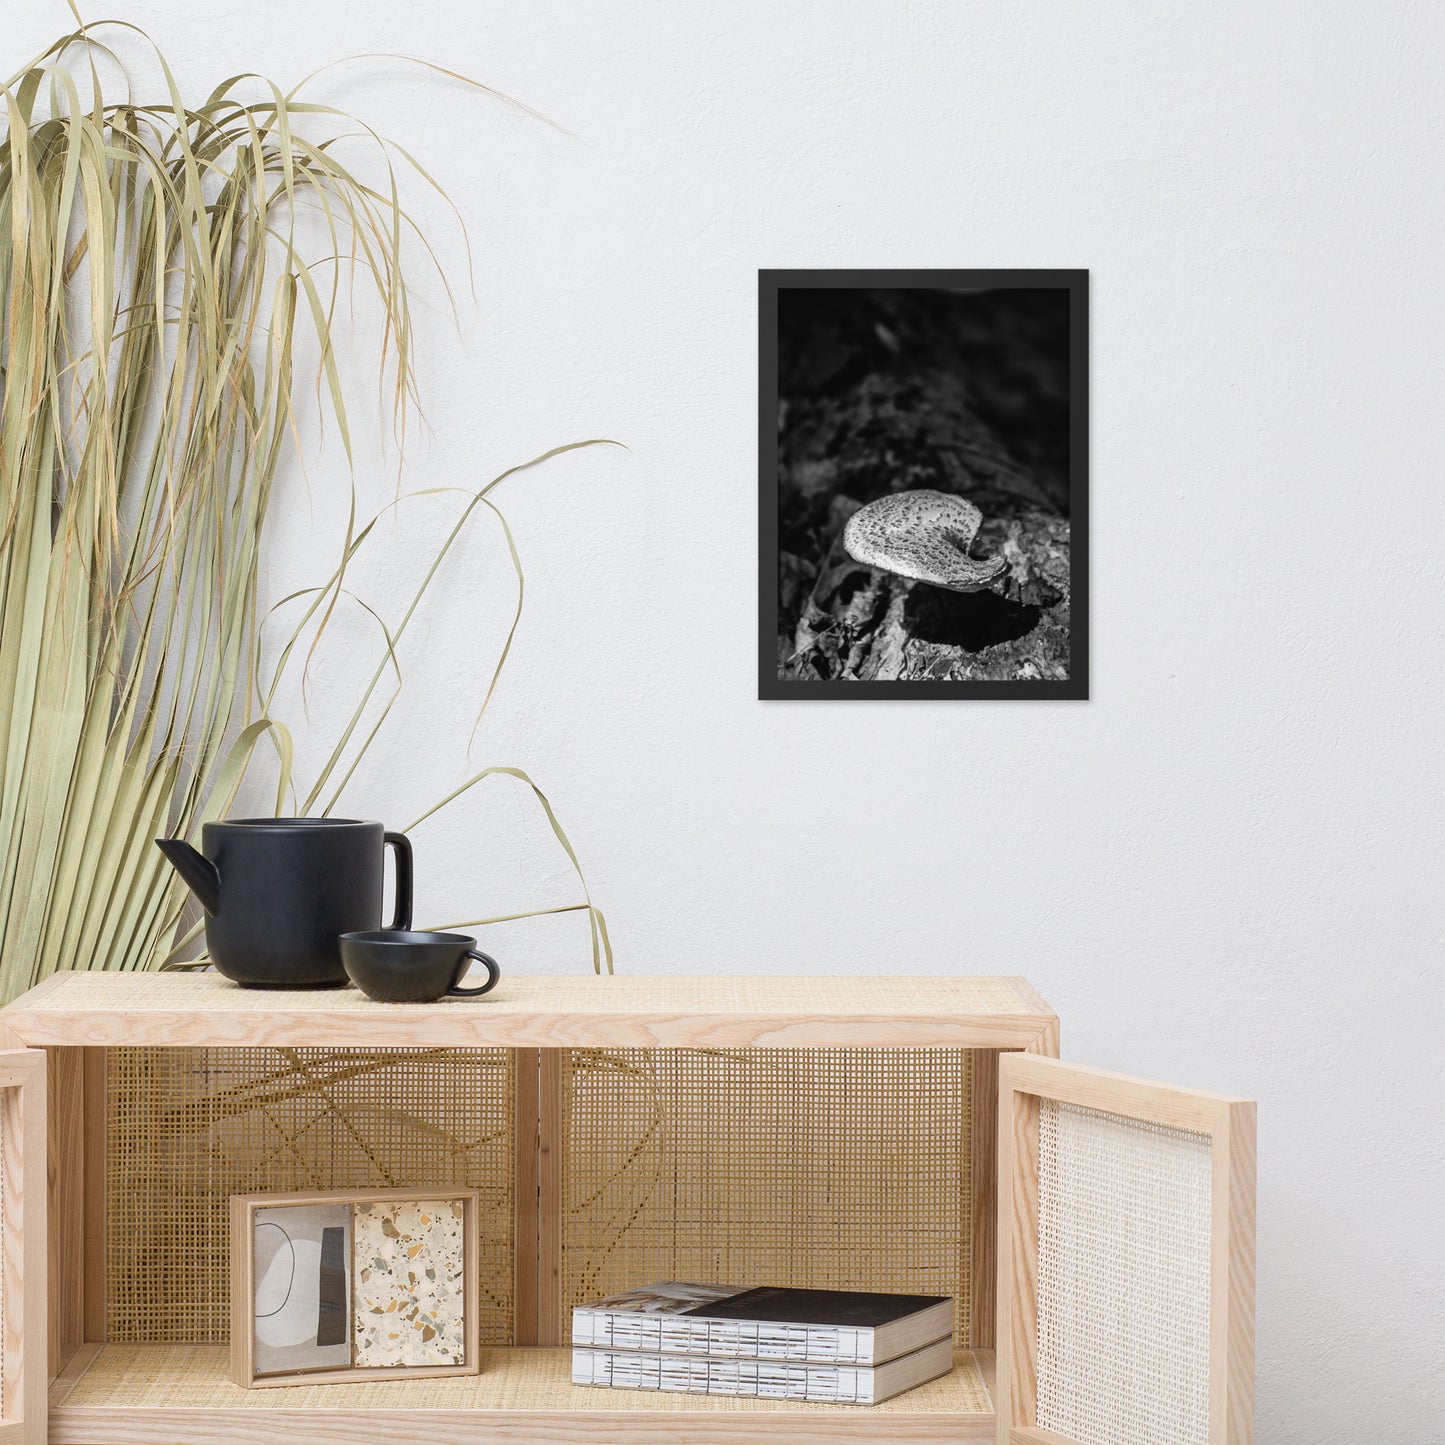 Rustic Farmhouse Artwork: Mushroom on Log in Black and White Botanical Nature Photo Framed Wall Art Print